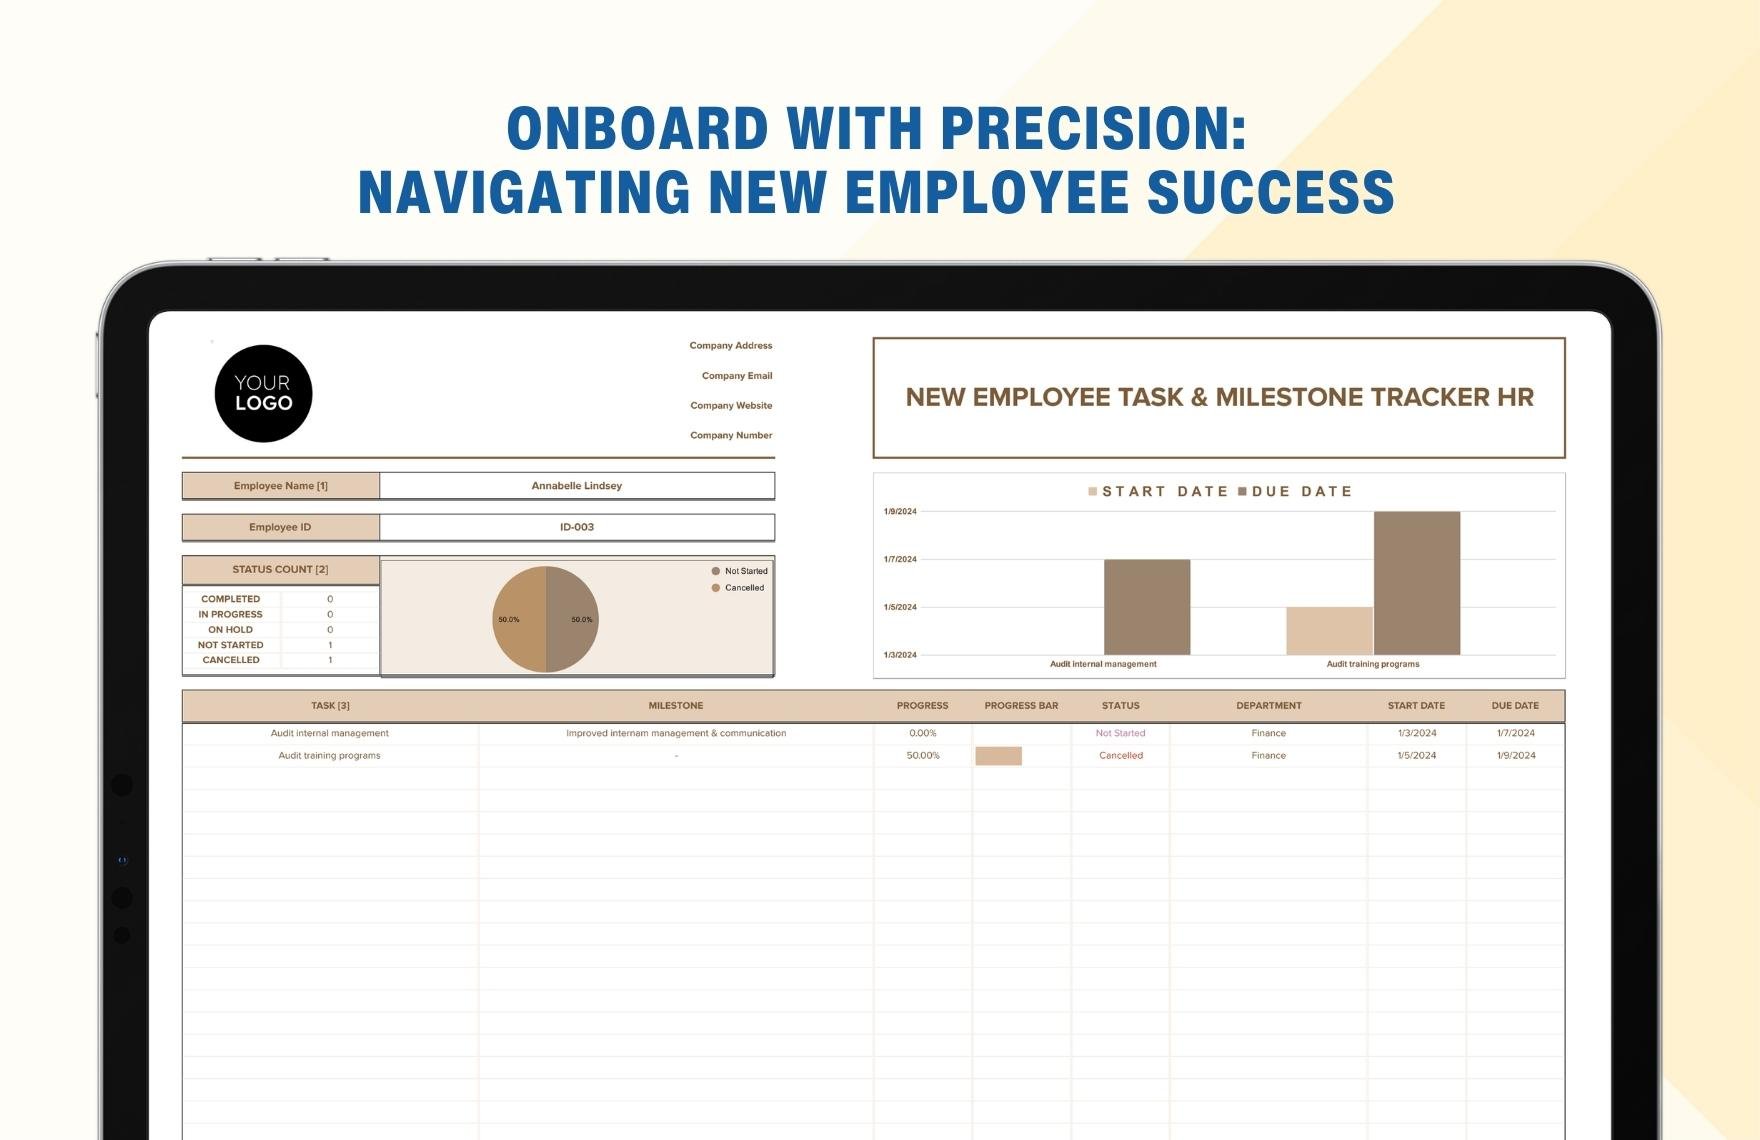 New Employee Task & Milestone Tracker HR Template